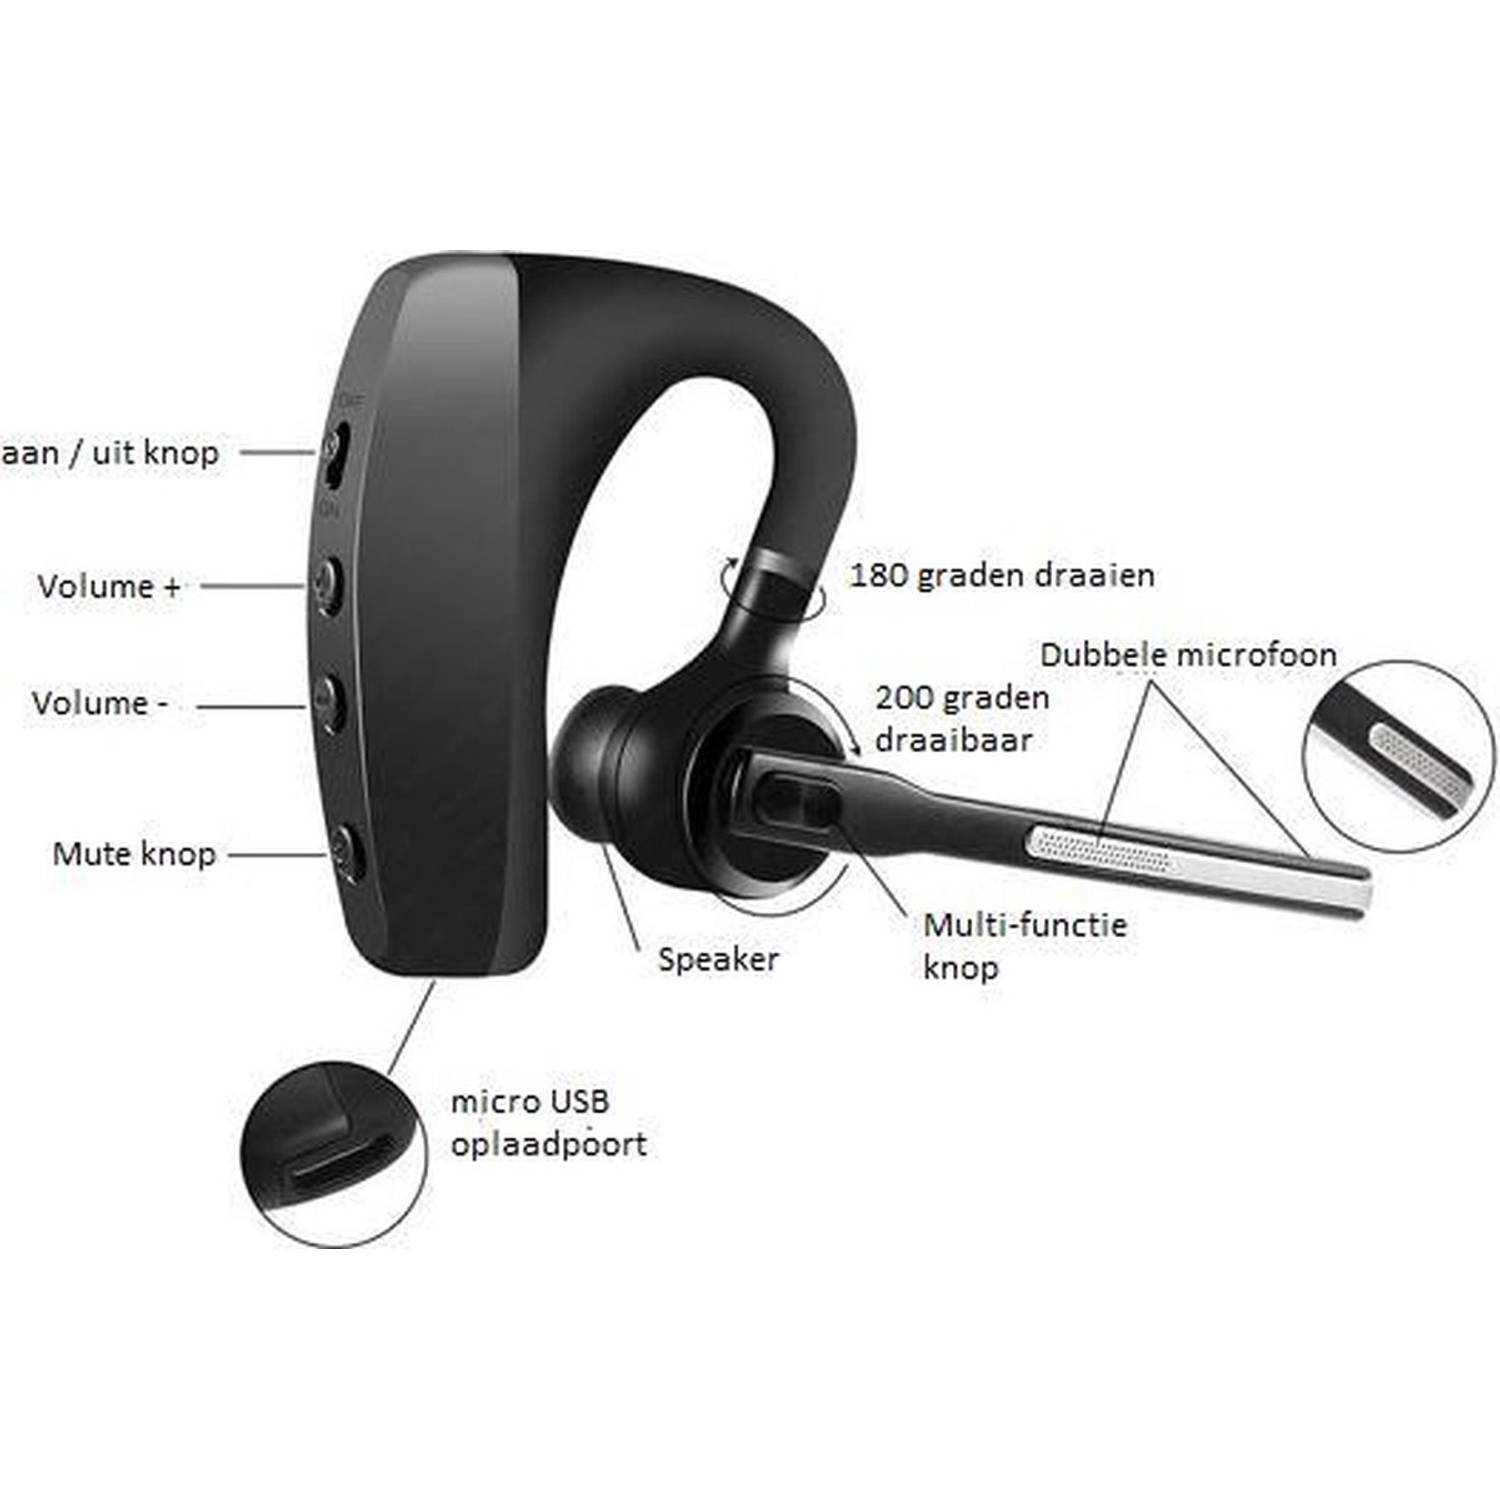 Broers en zussen Blij Snel Fedec bluetooth headset S1 - Zwart | Blokker